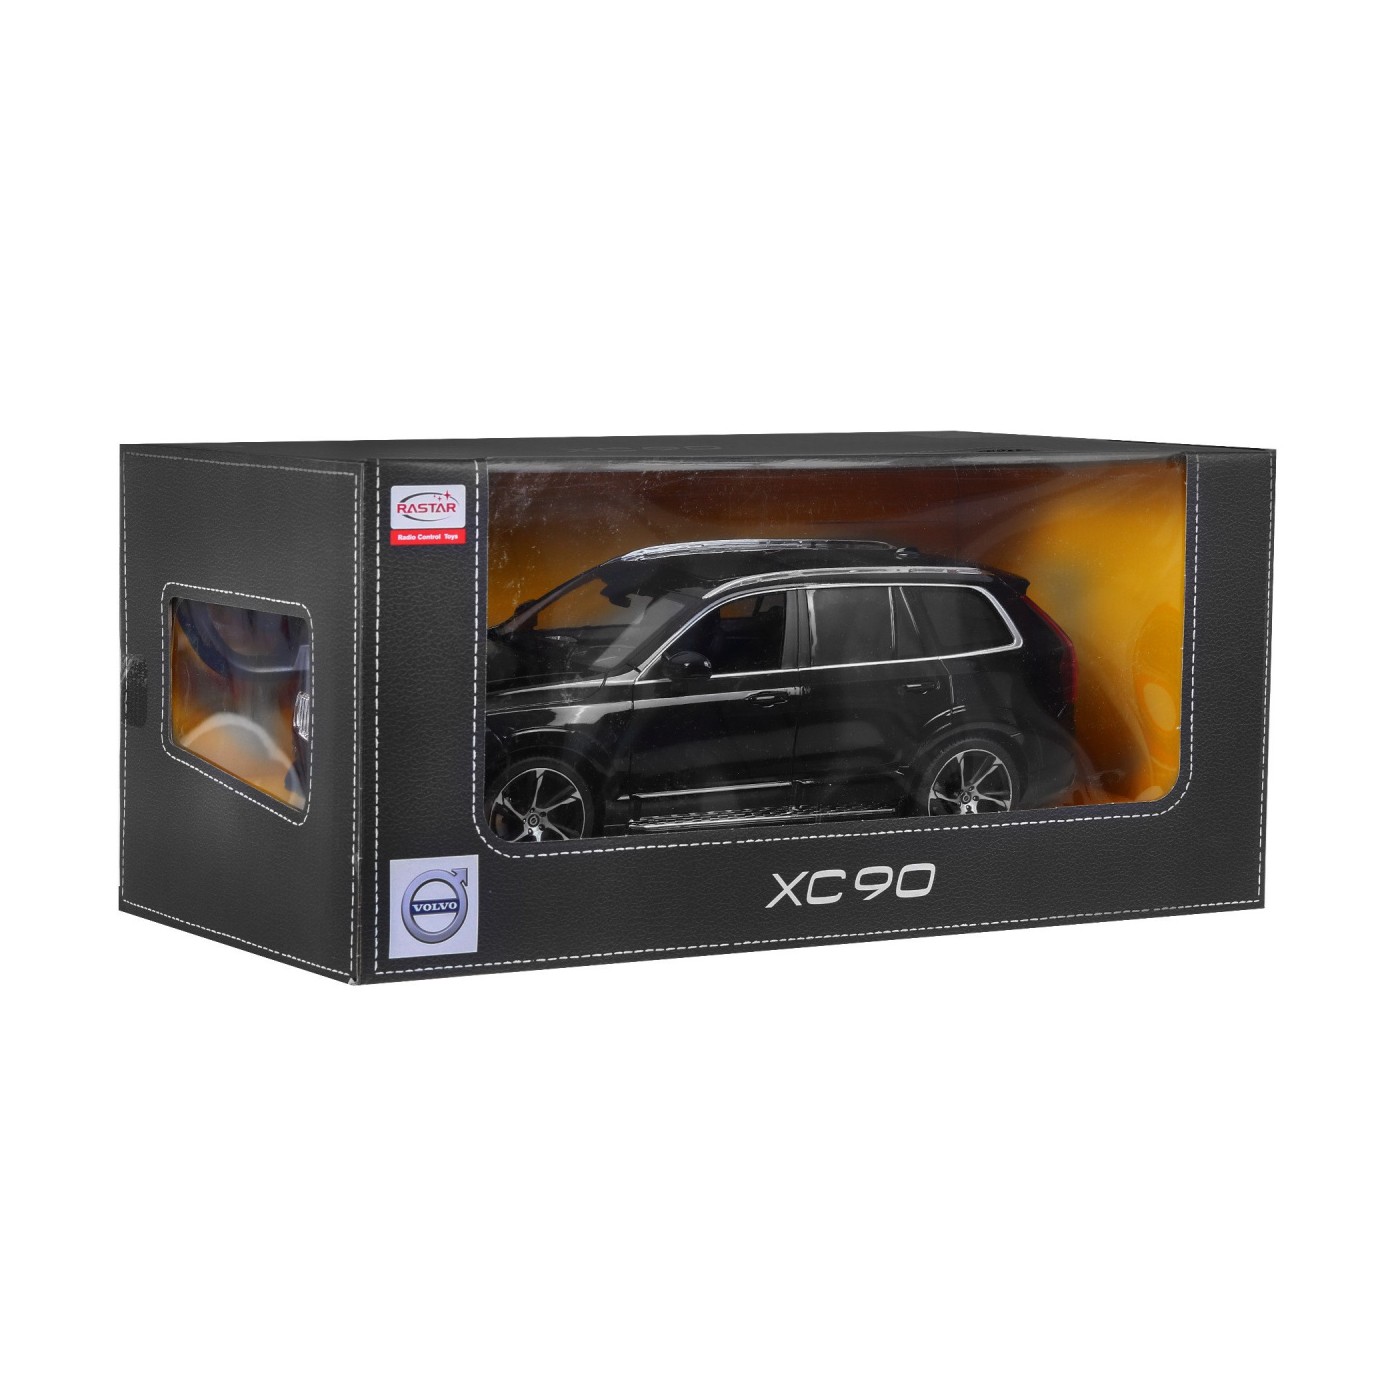 R/C toy car Volvo XC90 Black 1:14 RASTAR